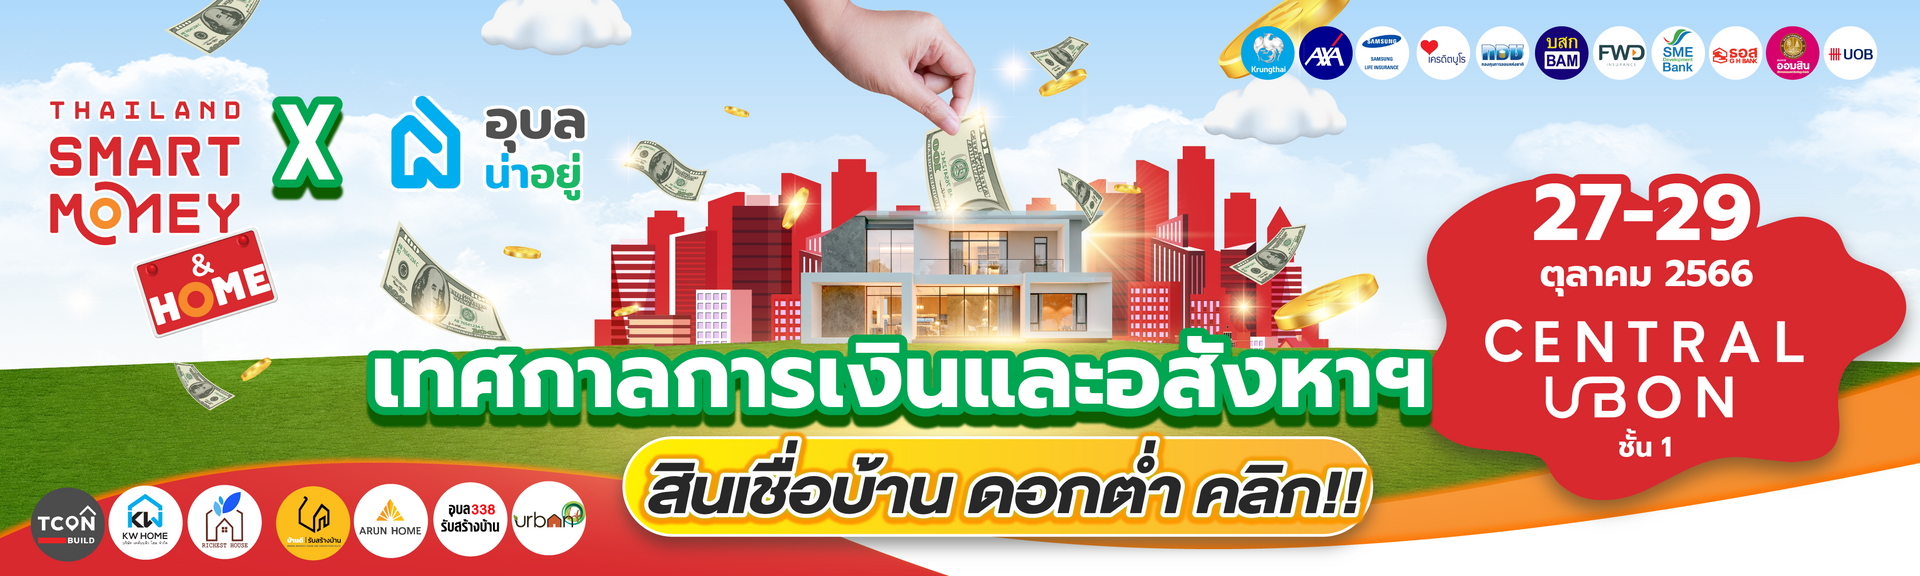 Thailand Smart Money & Home x UbonNayoo